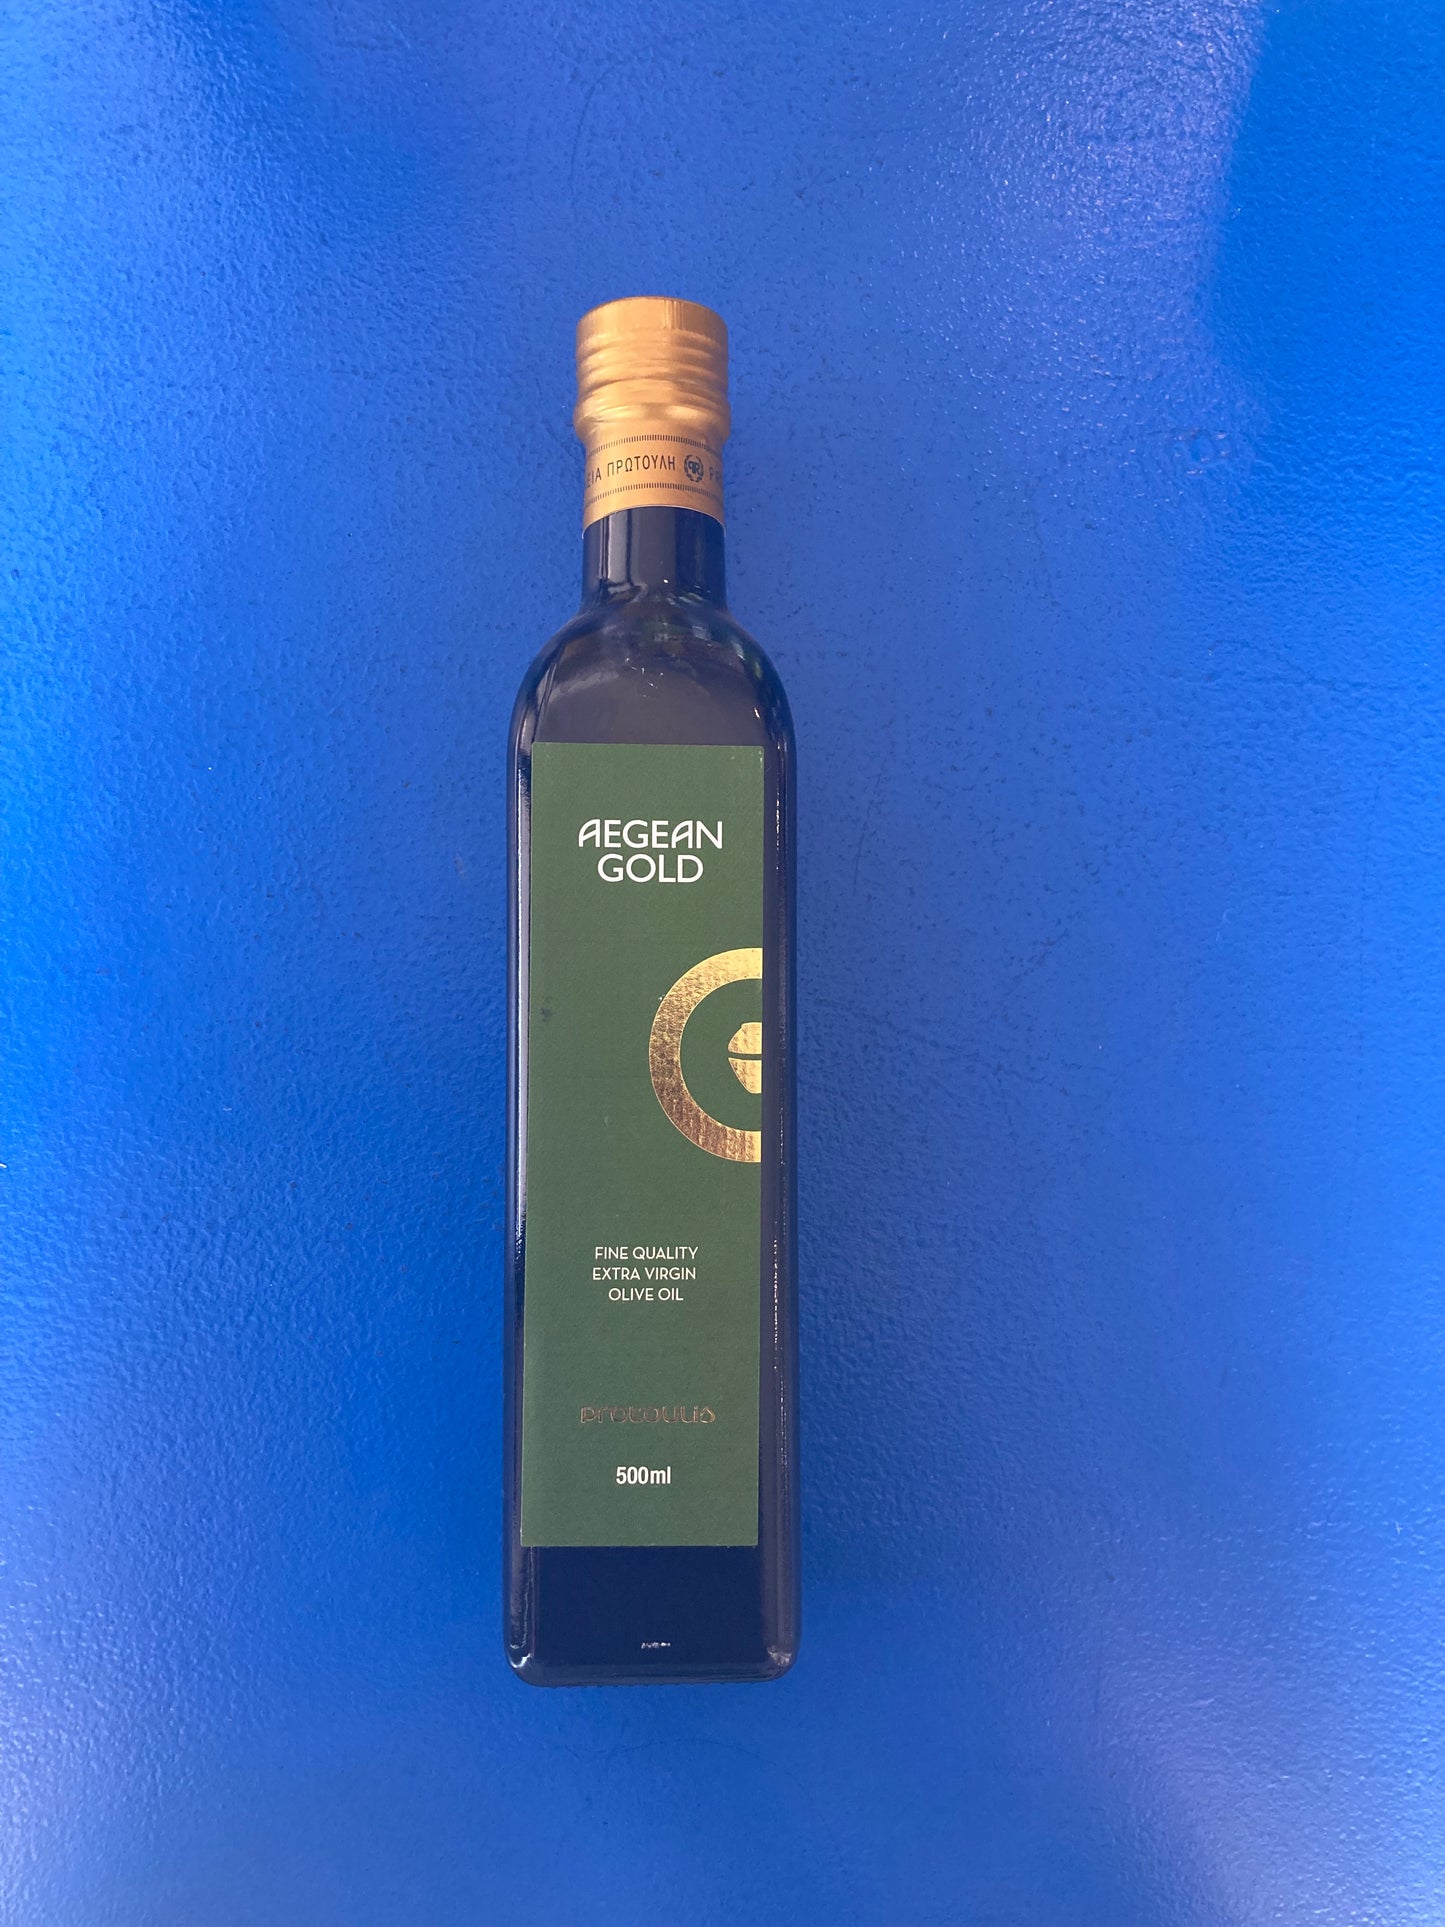 Aegean Gold Extra Virgin Olive Oil tins